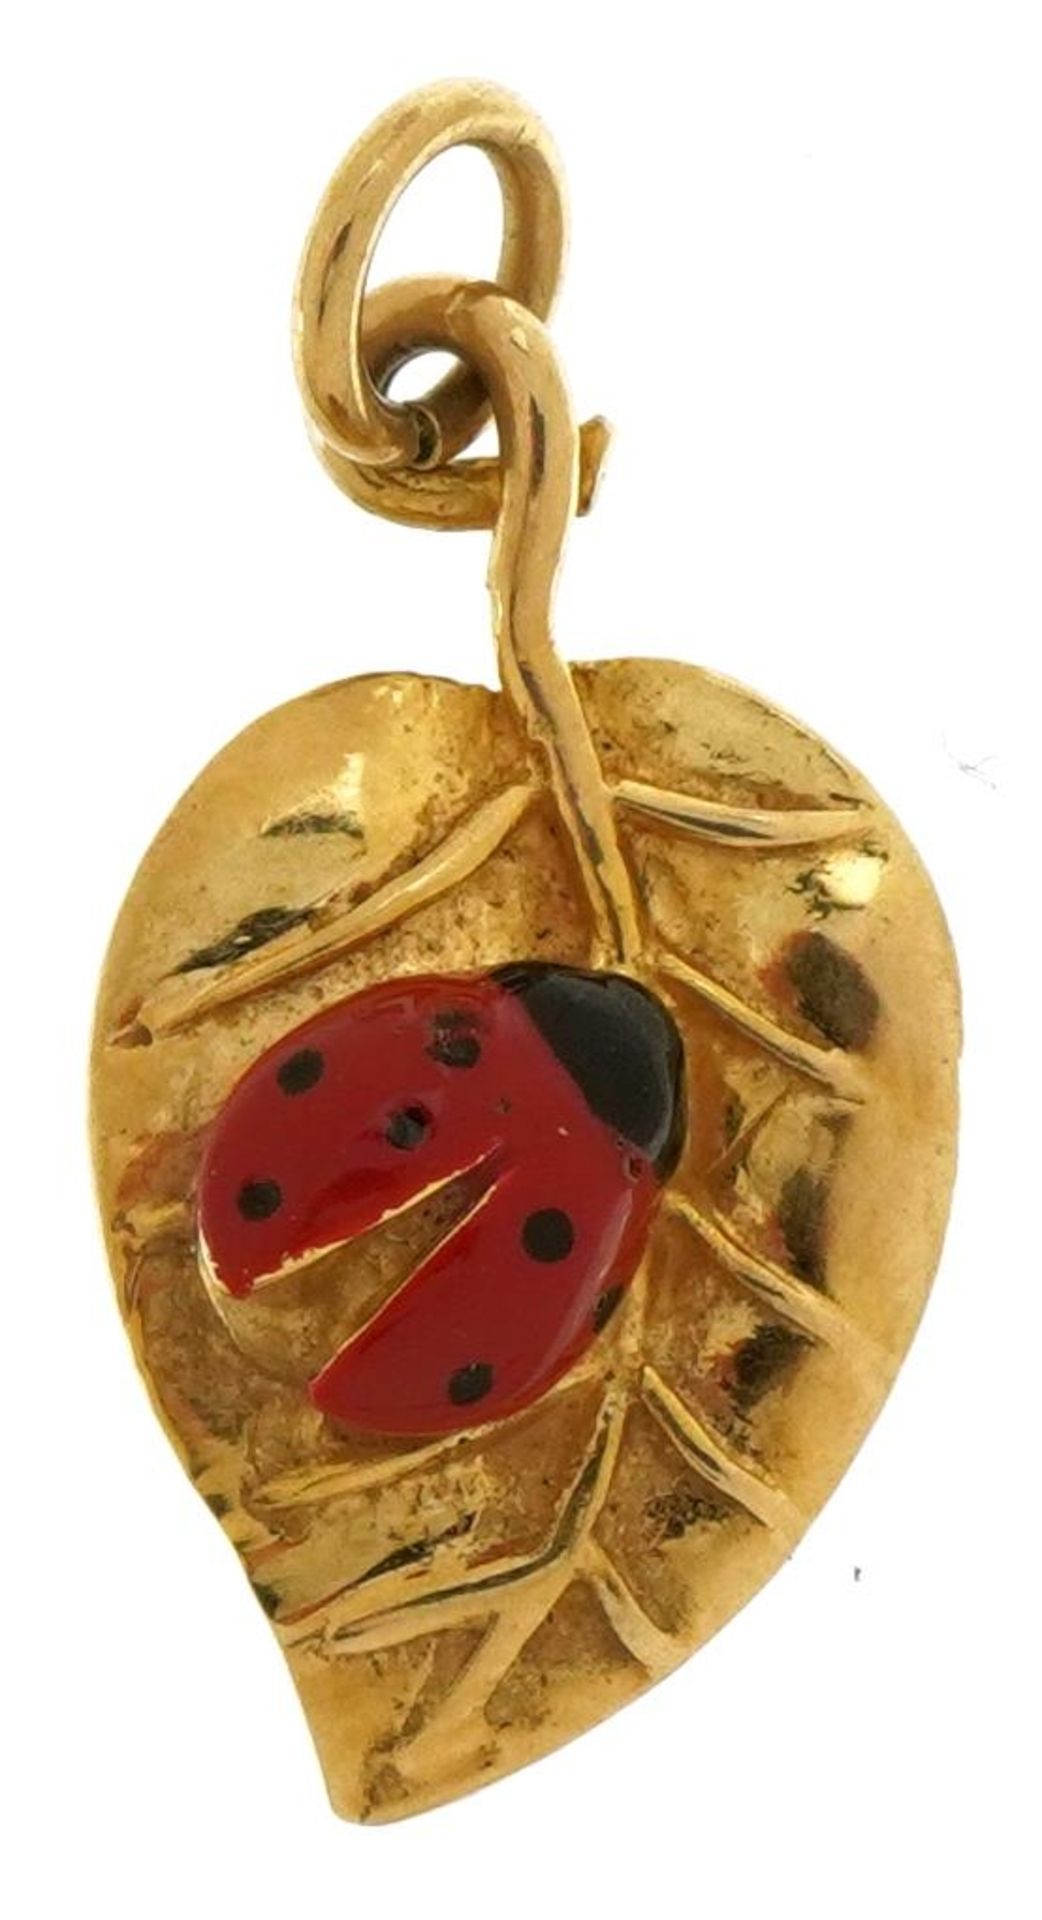 9ct gold and enamel ladybird on leaf charm, 1.9cm high, 1.3g